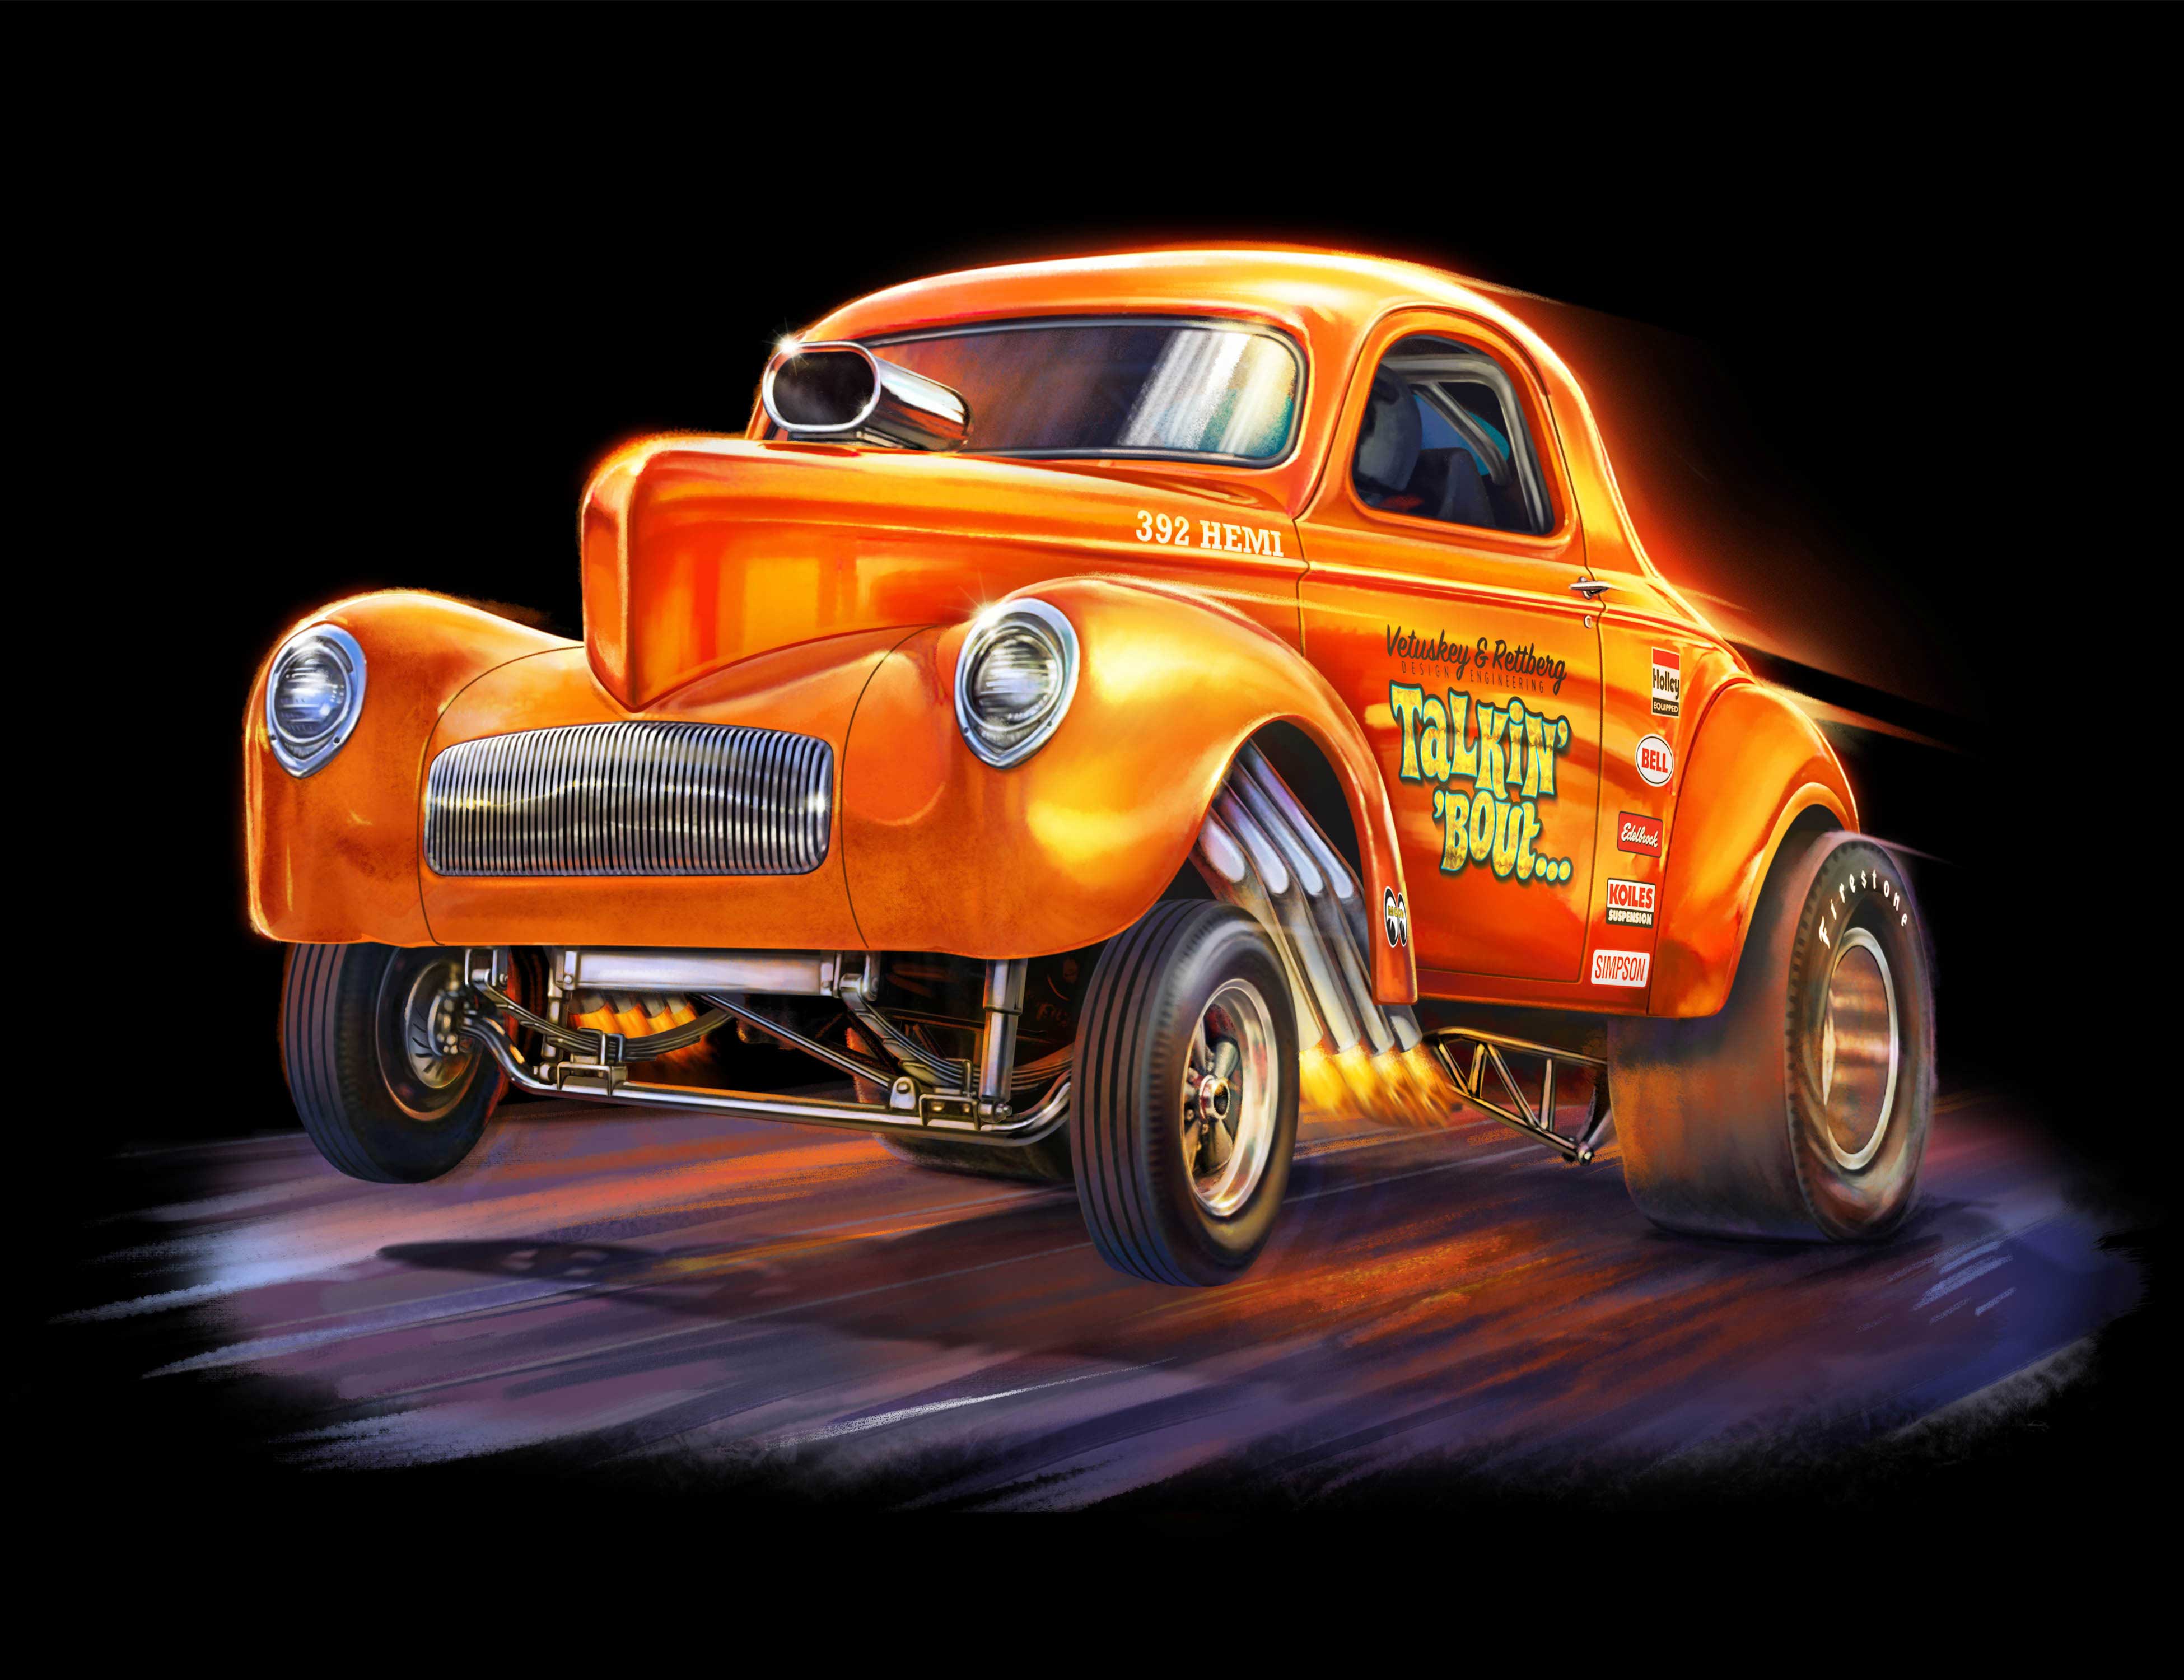 Ray Goudey Illustration Hot Wheels toy car 392 Hemi